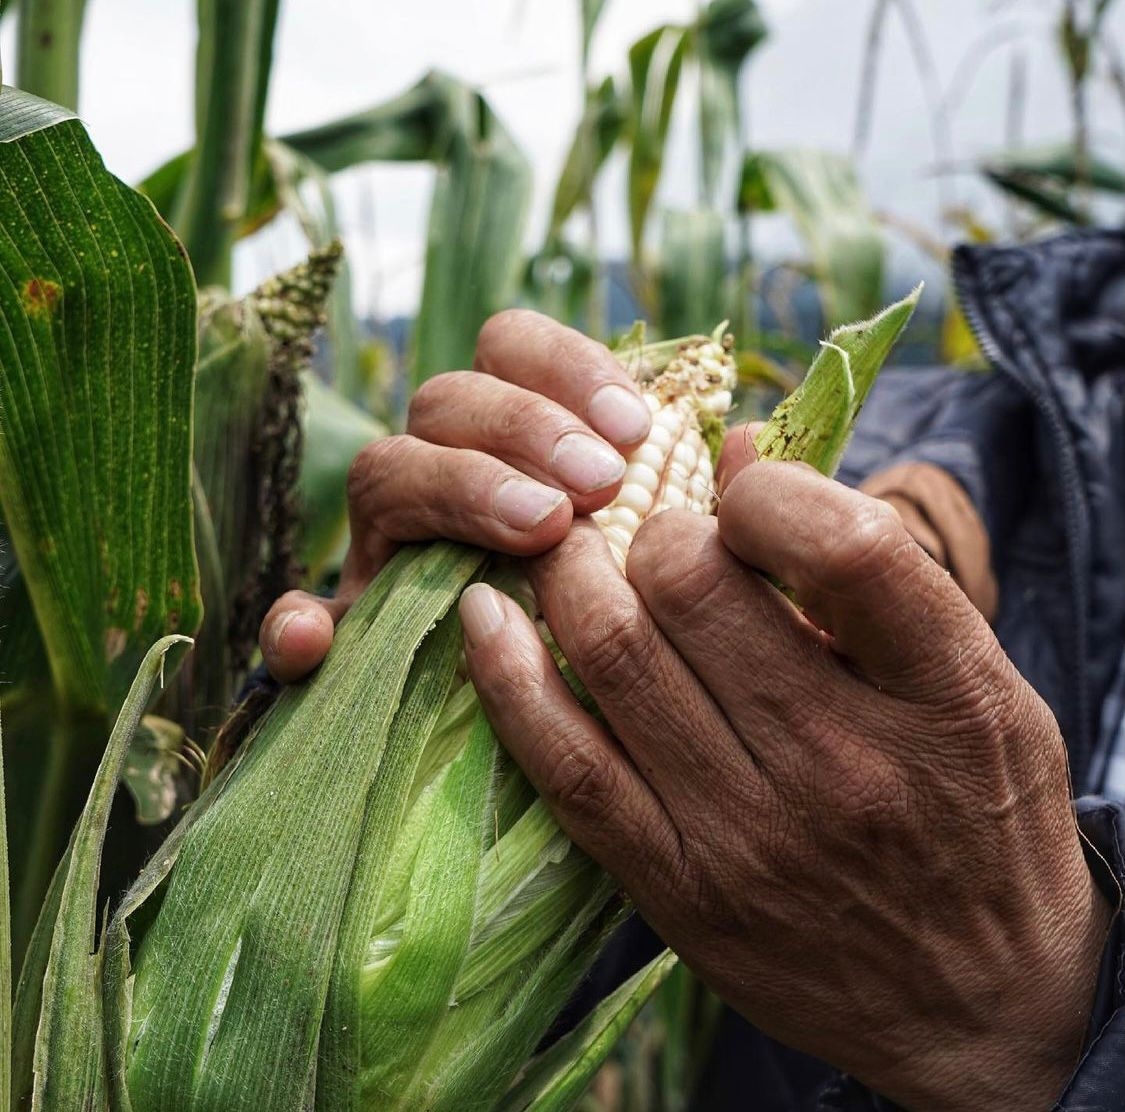 Segalmex finaliza programa de adquisición de maíz blanco en Sinaloa